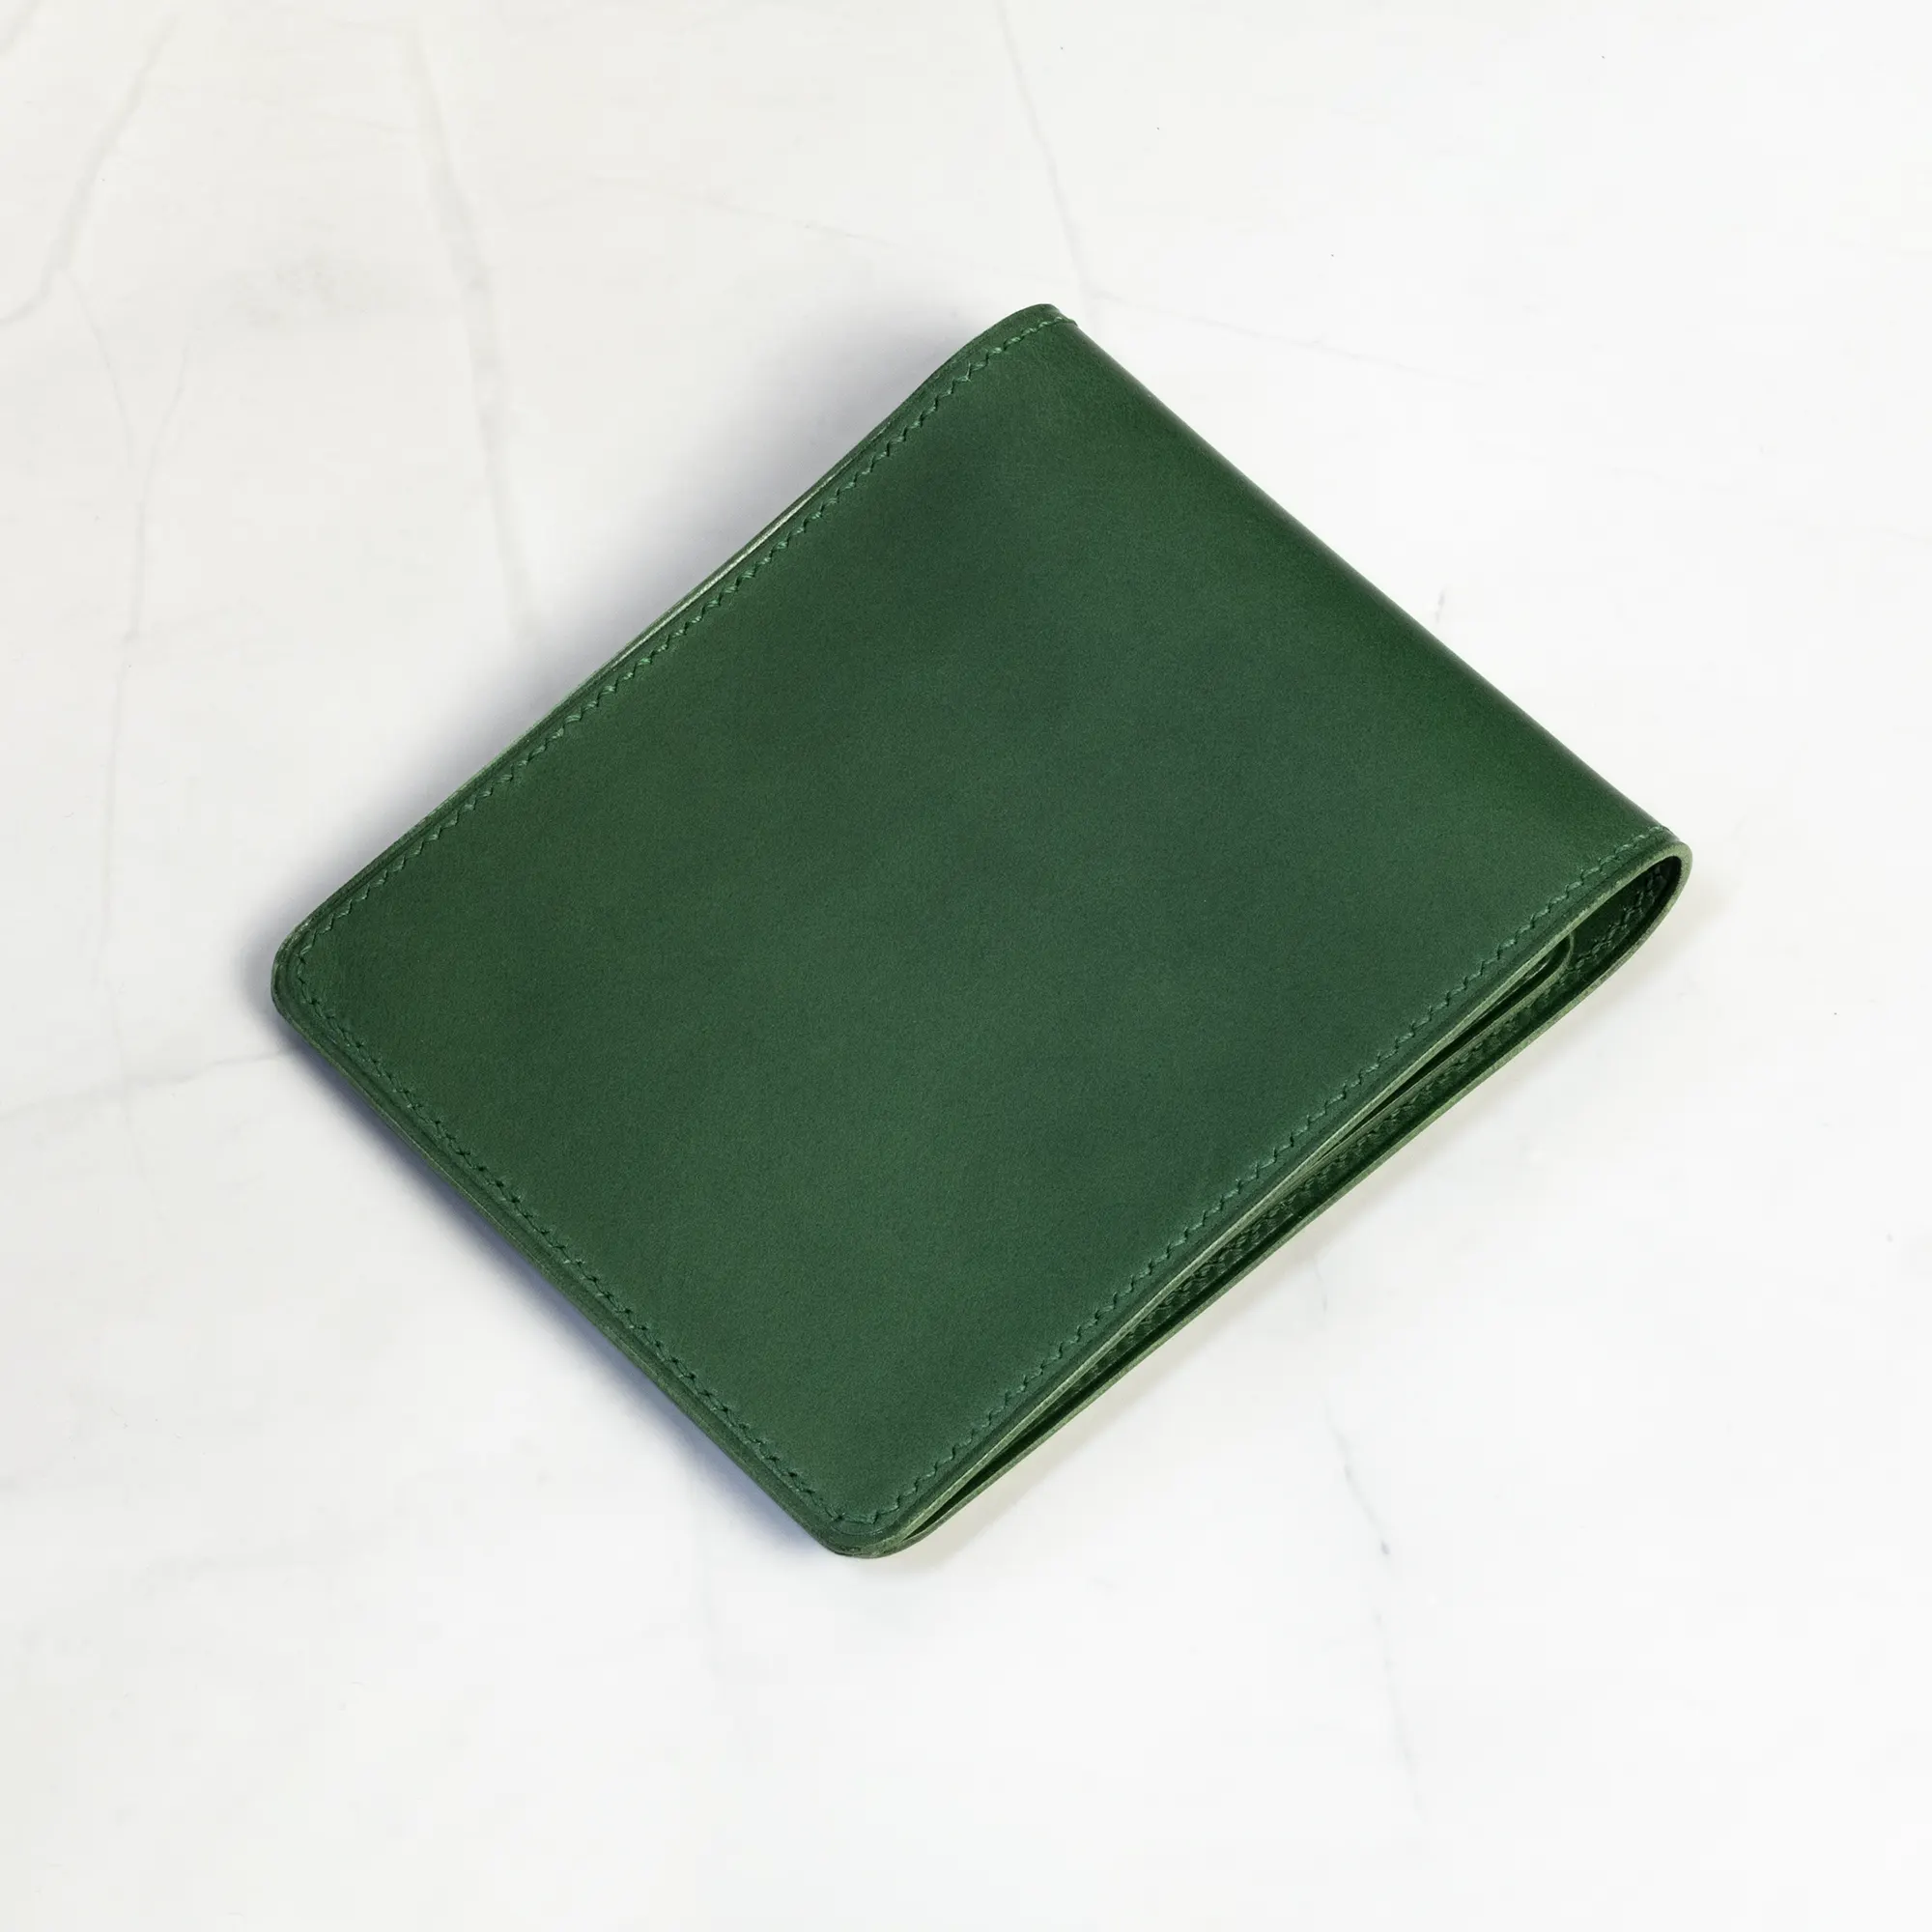 green bifold leather wallet large storage saddle stitched